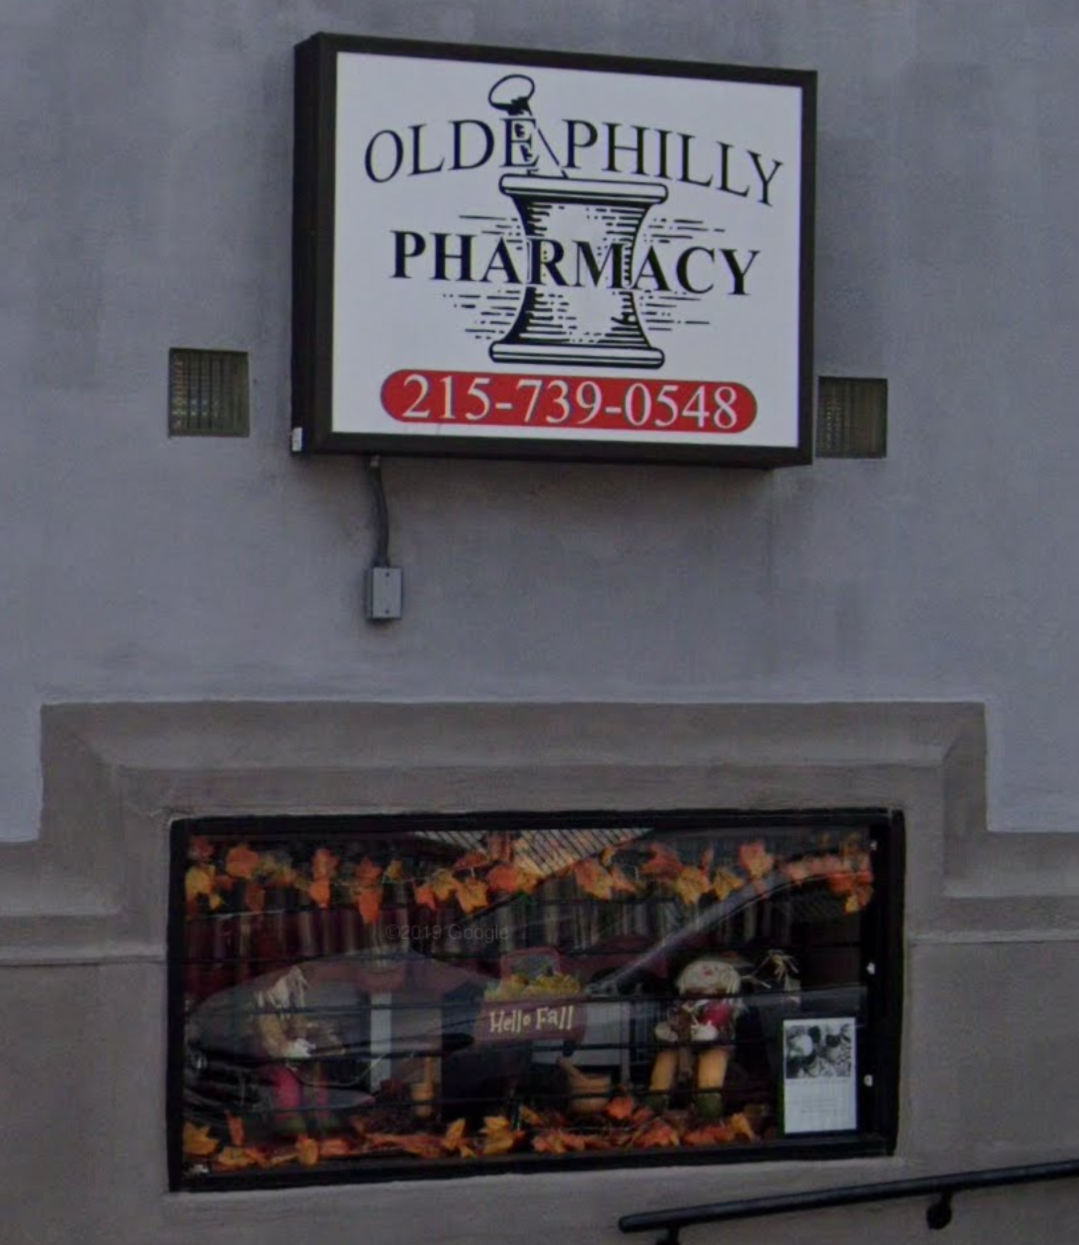 Olde Philly Pharmacy